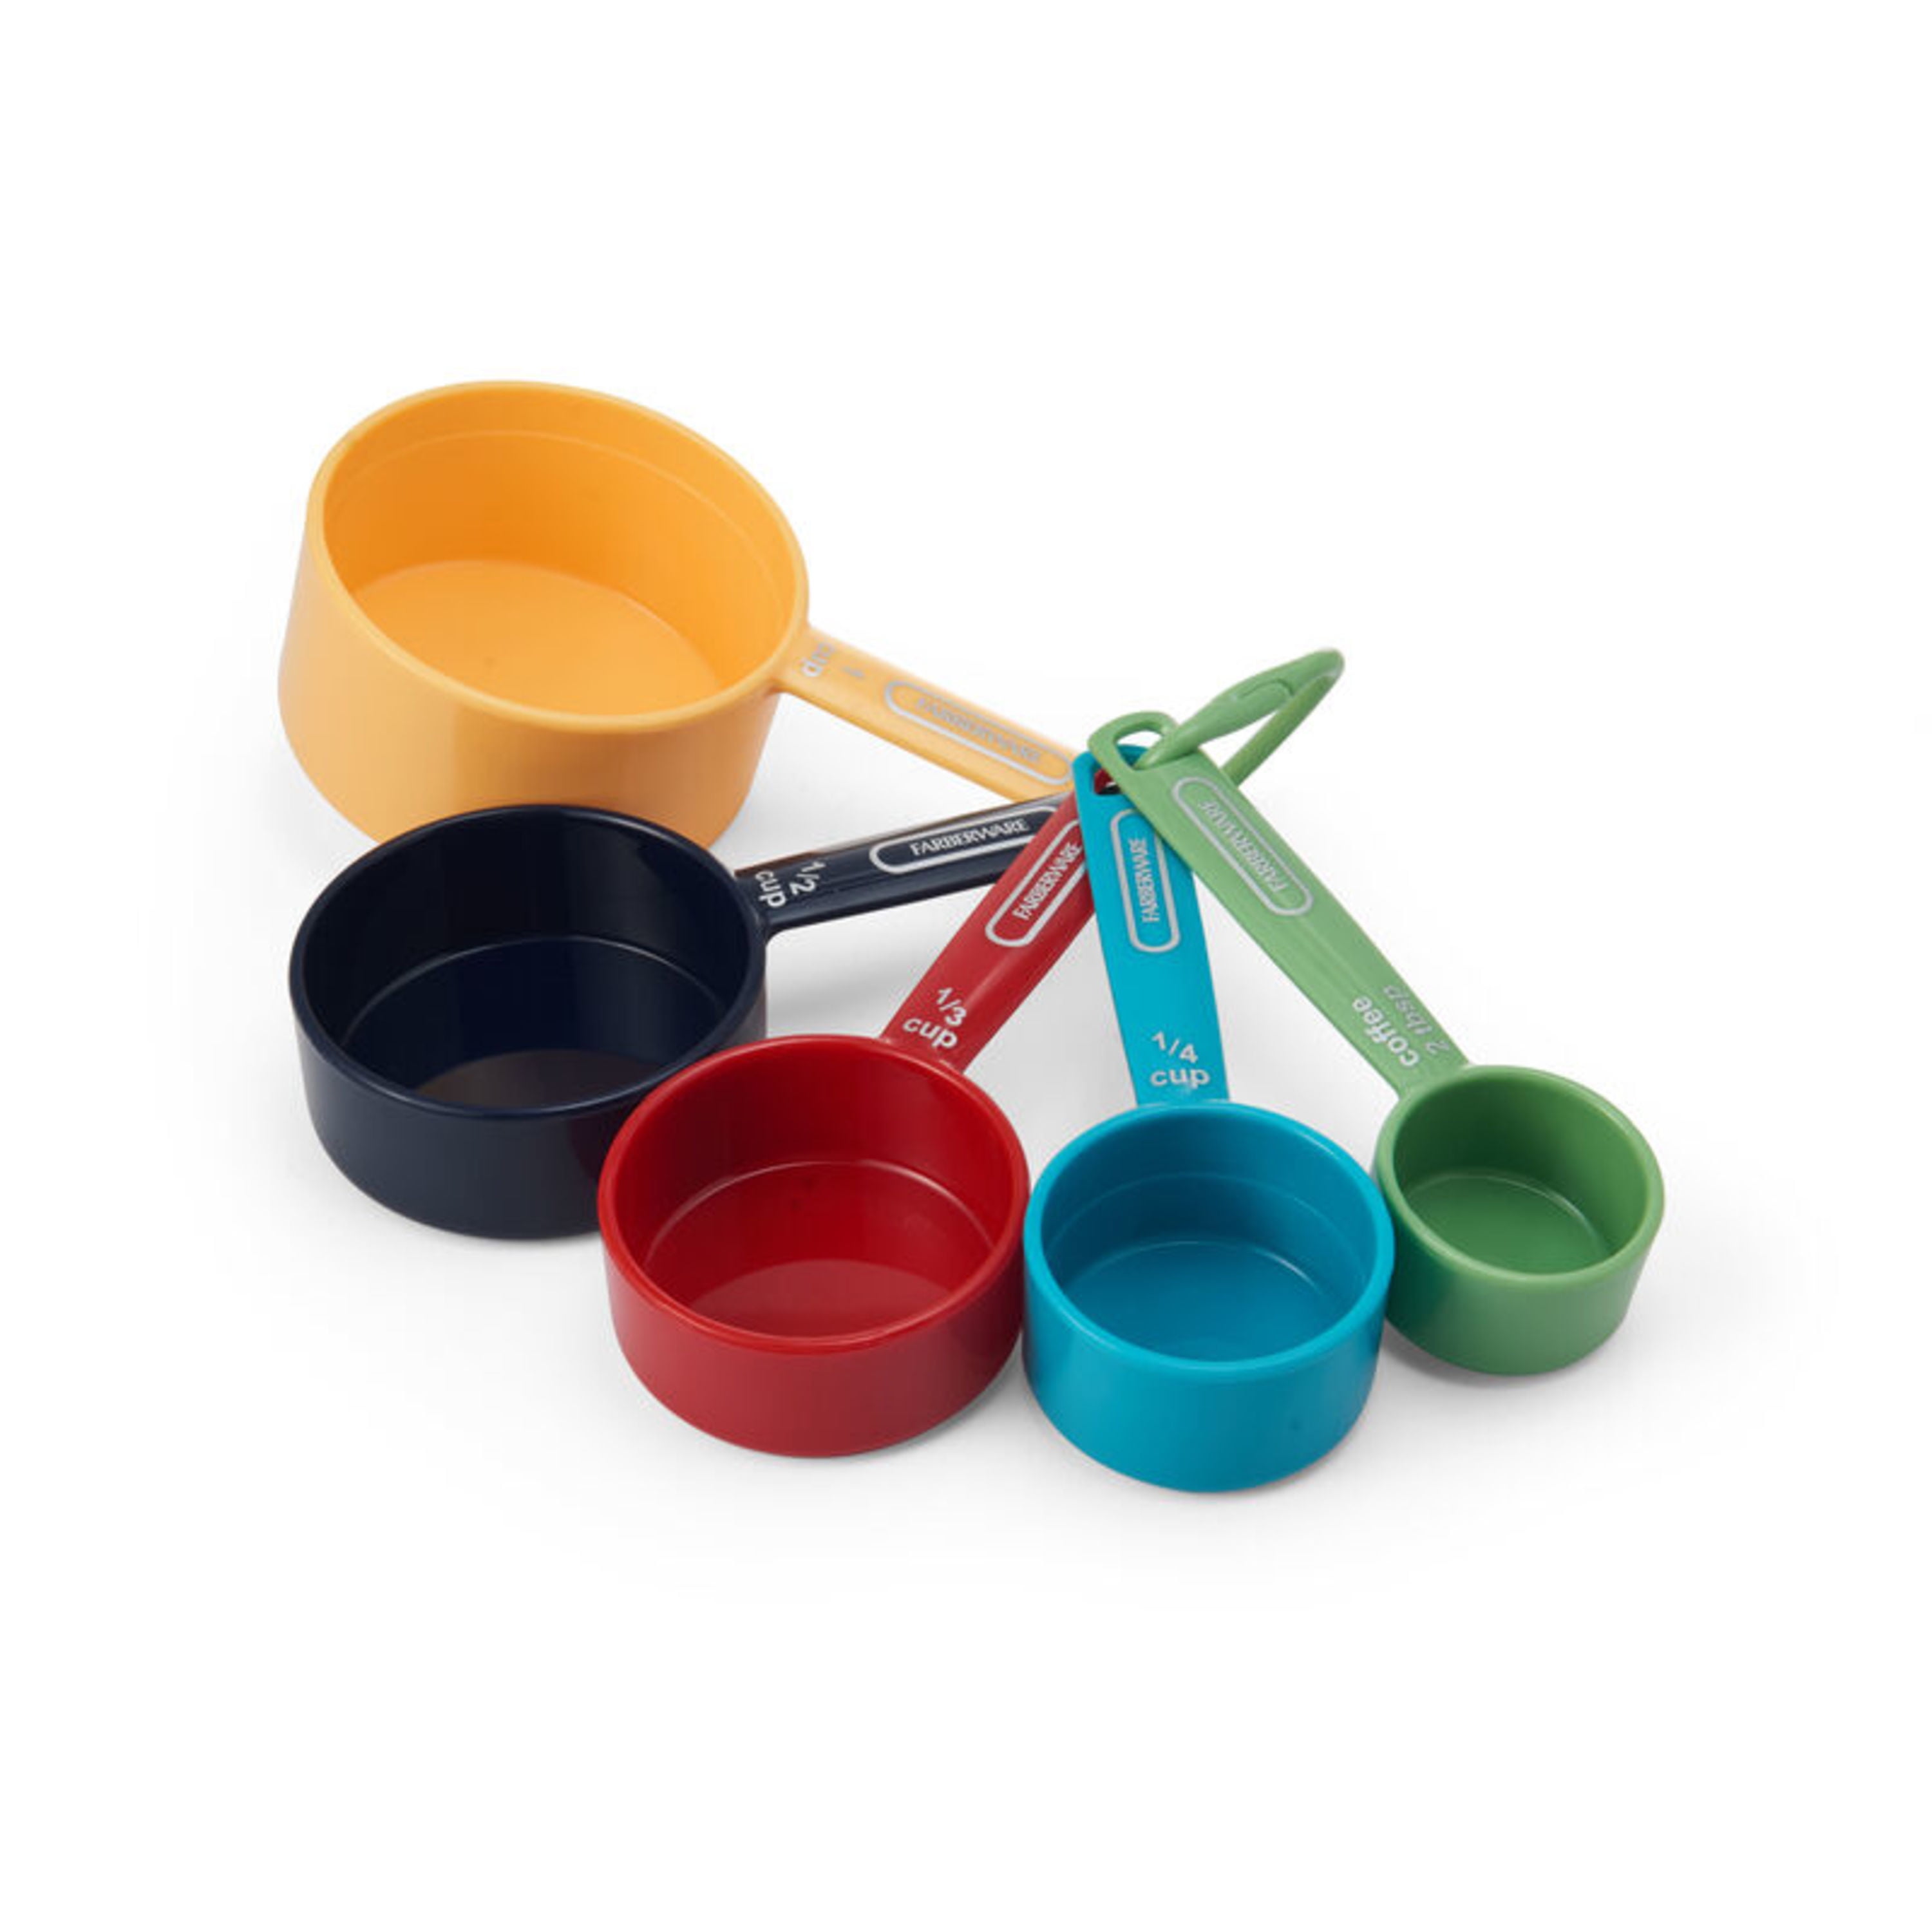 Farberware 7 Piece Measuring Spoon Set, Multi-colored